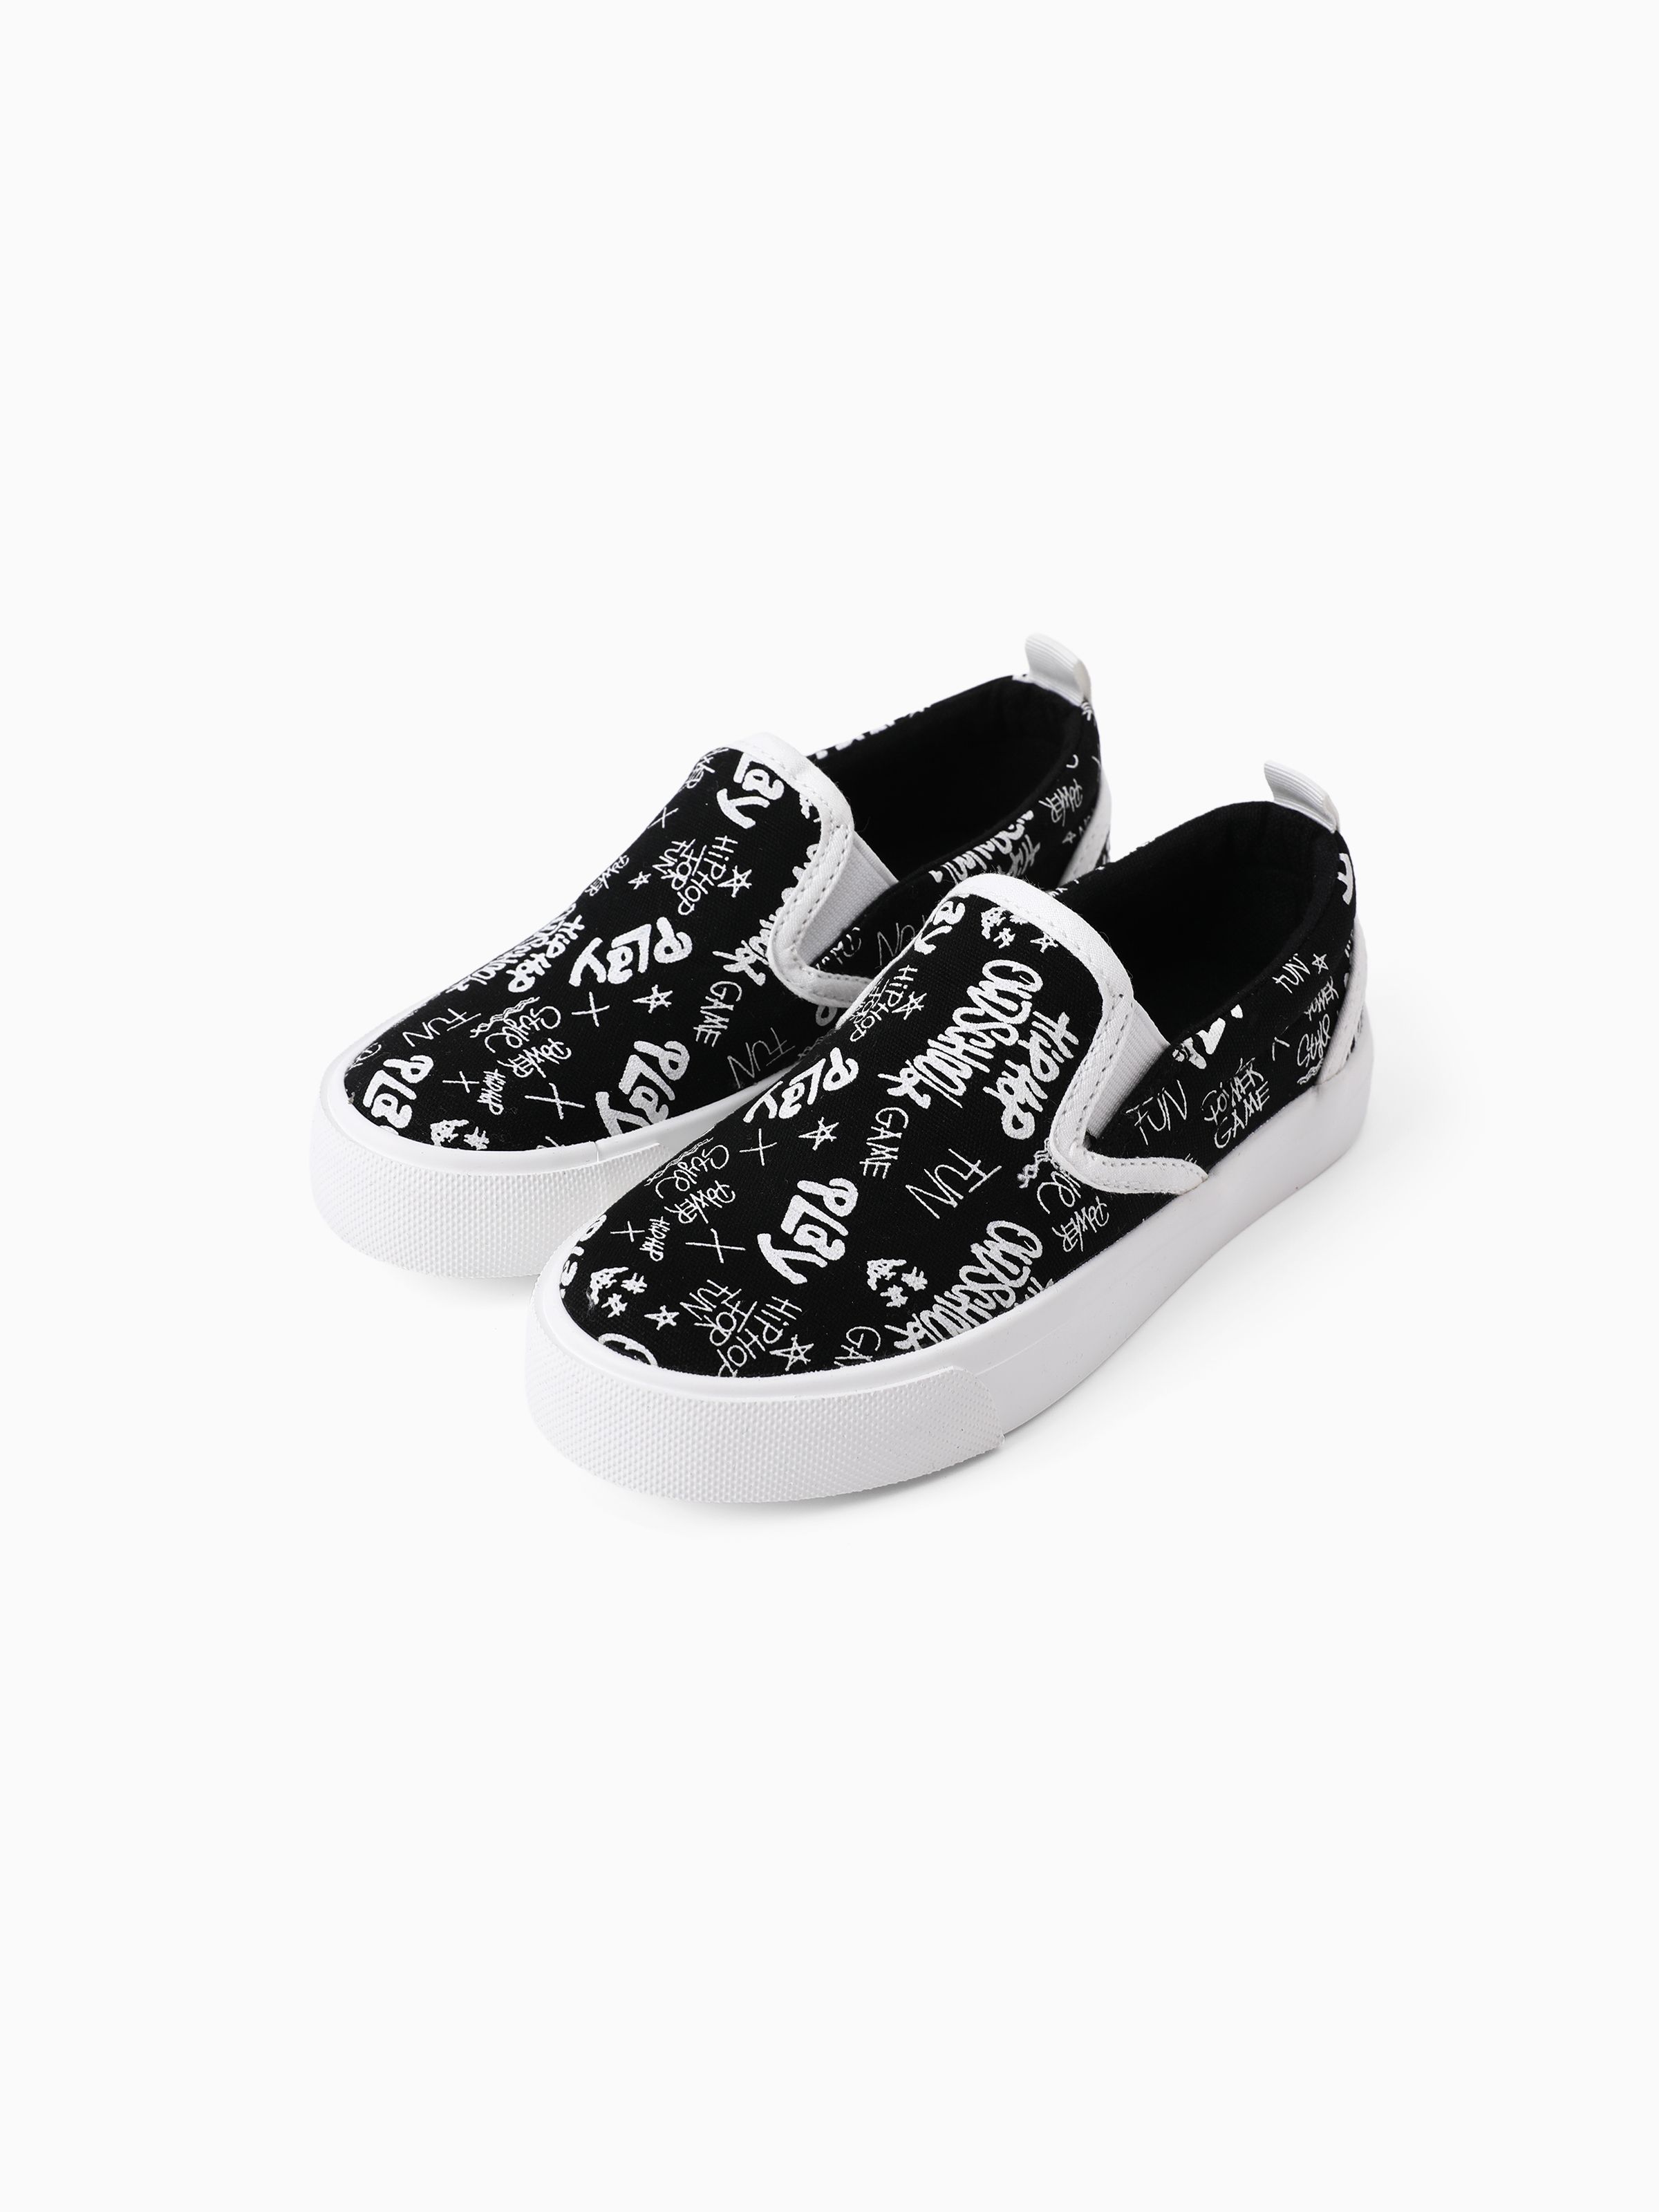 

Toddler/Kid Unisex Casual Letter Graffiti Black/White Shoes